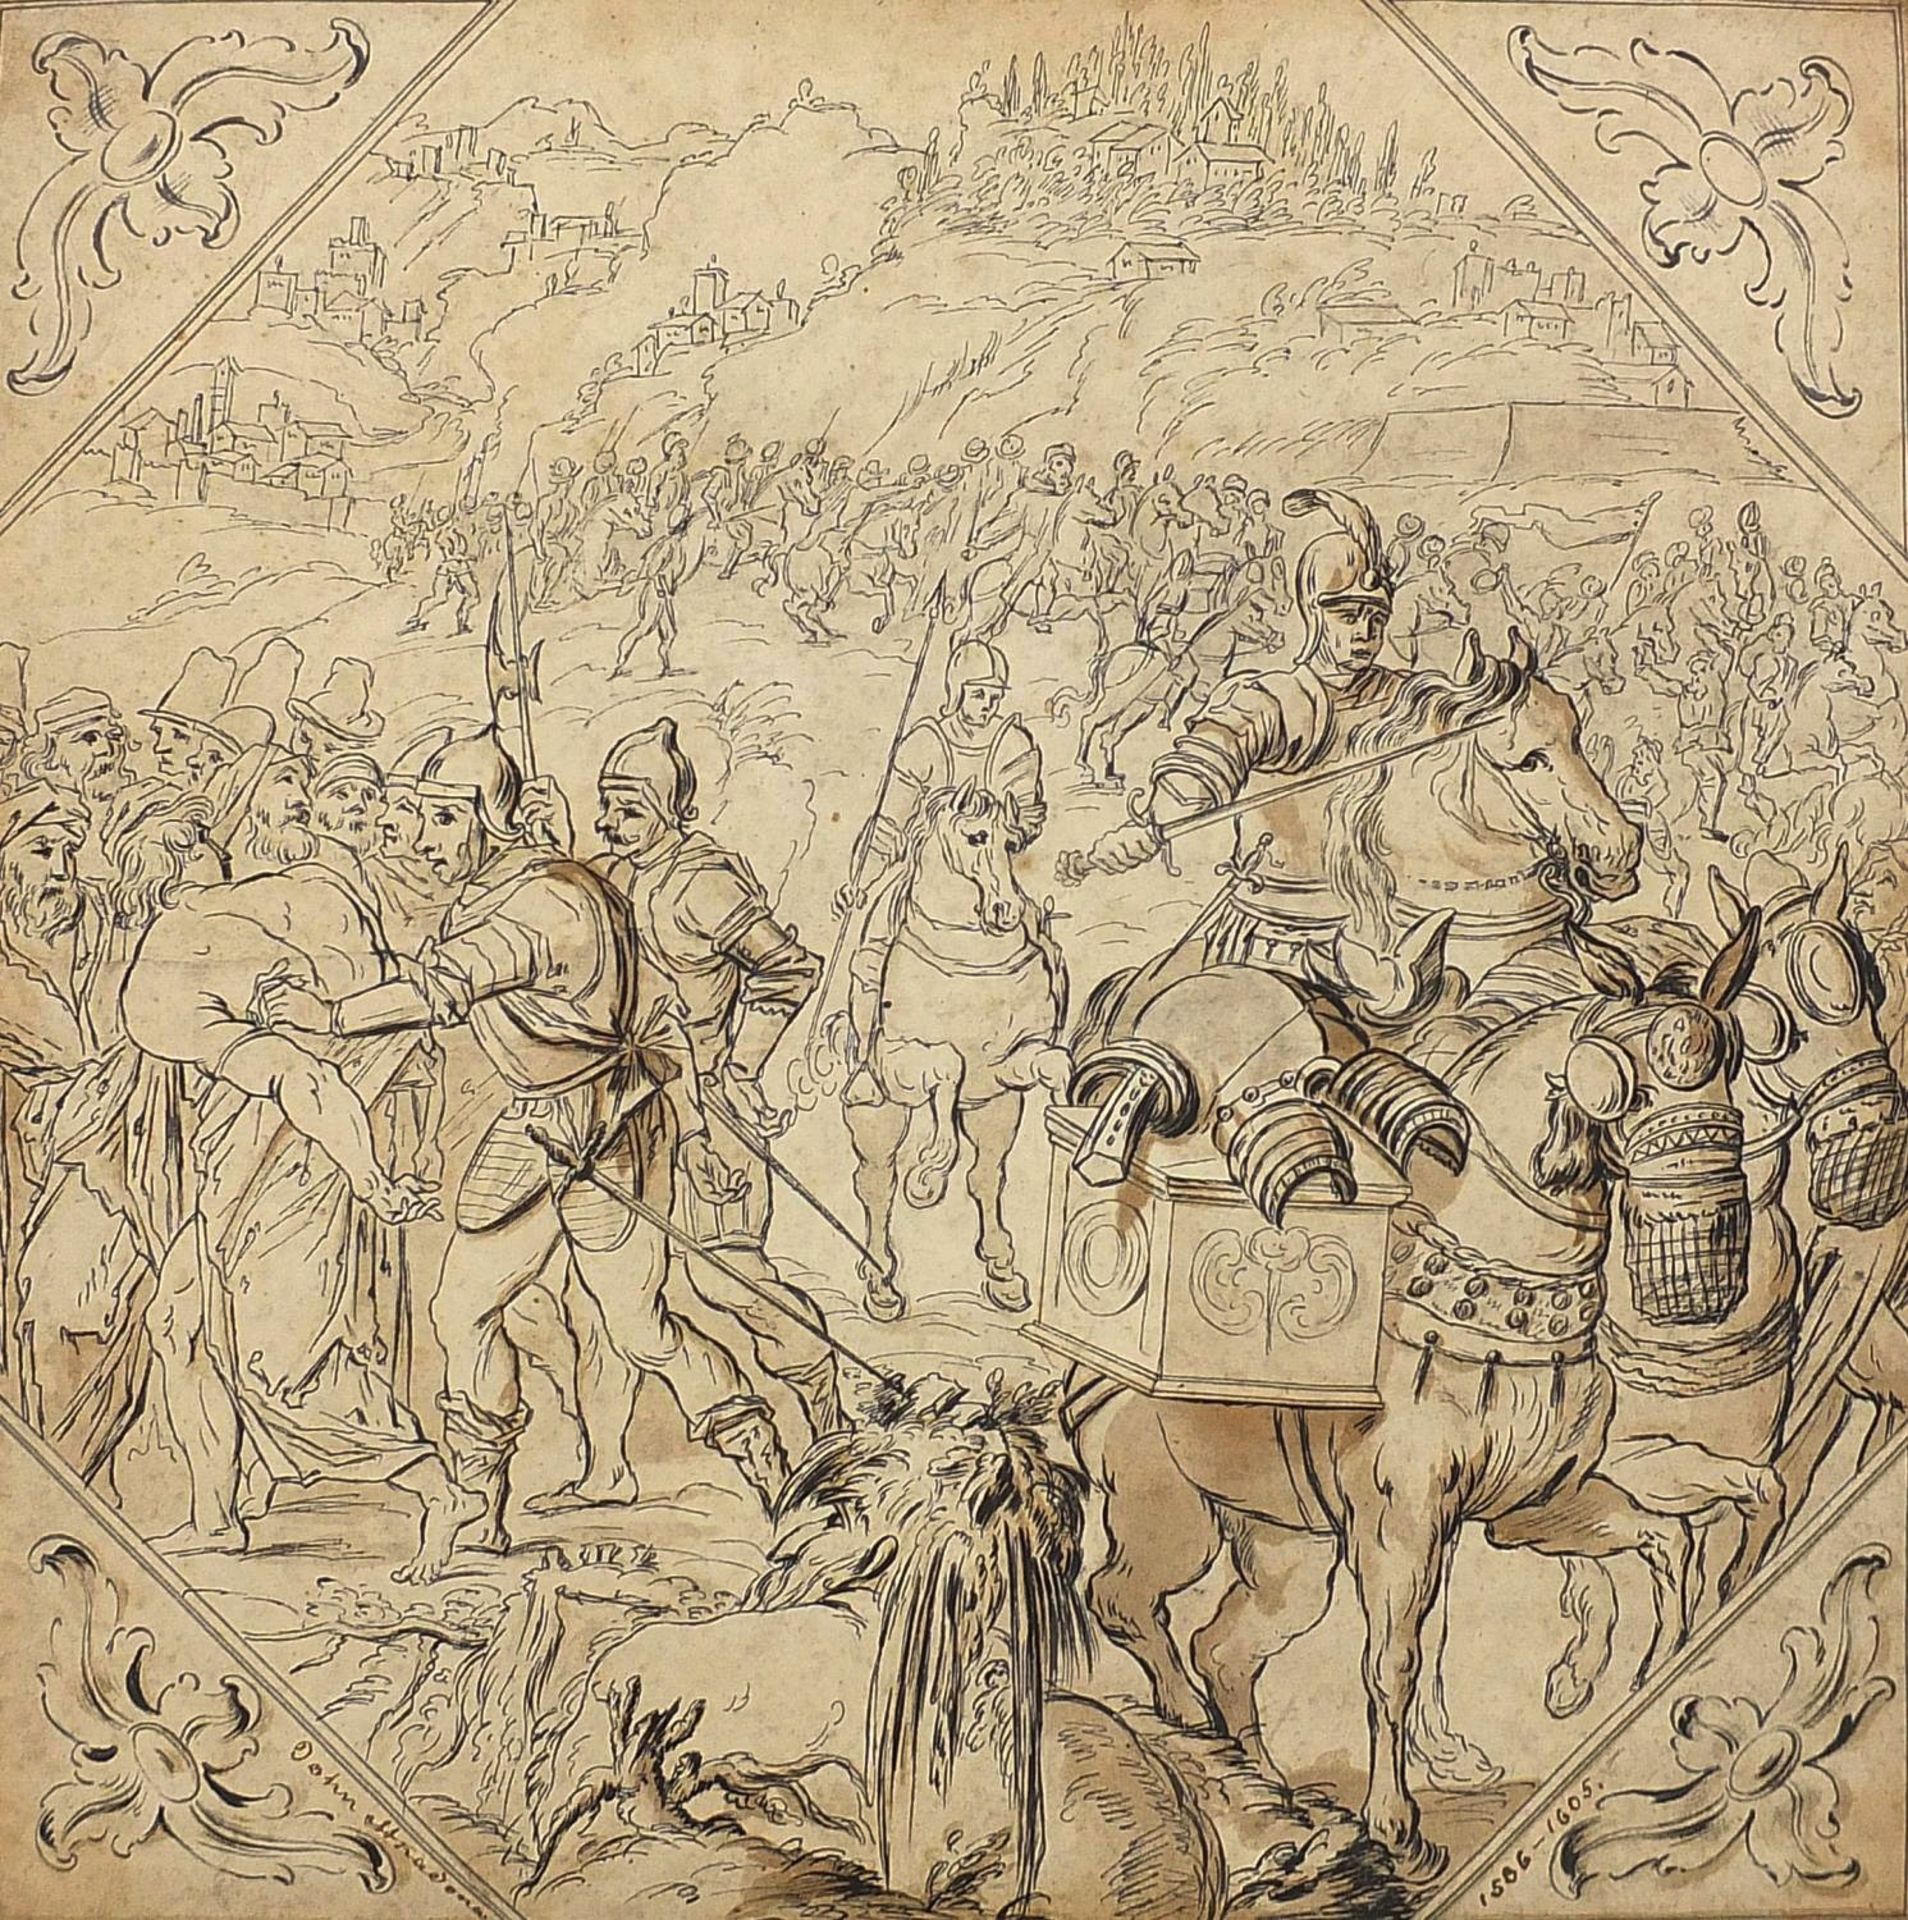 Manner of Jan van der Straet - Battle scene with figures on horseback wearing armour, antique